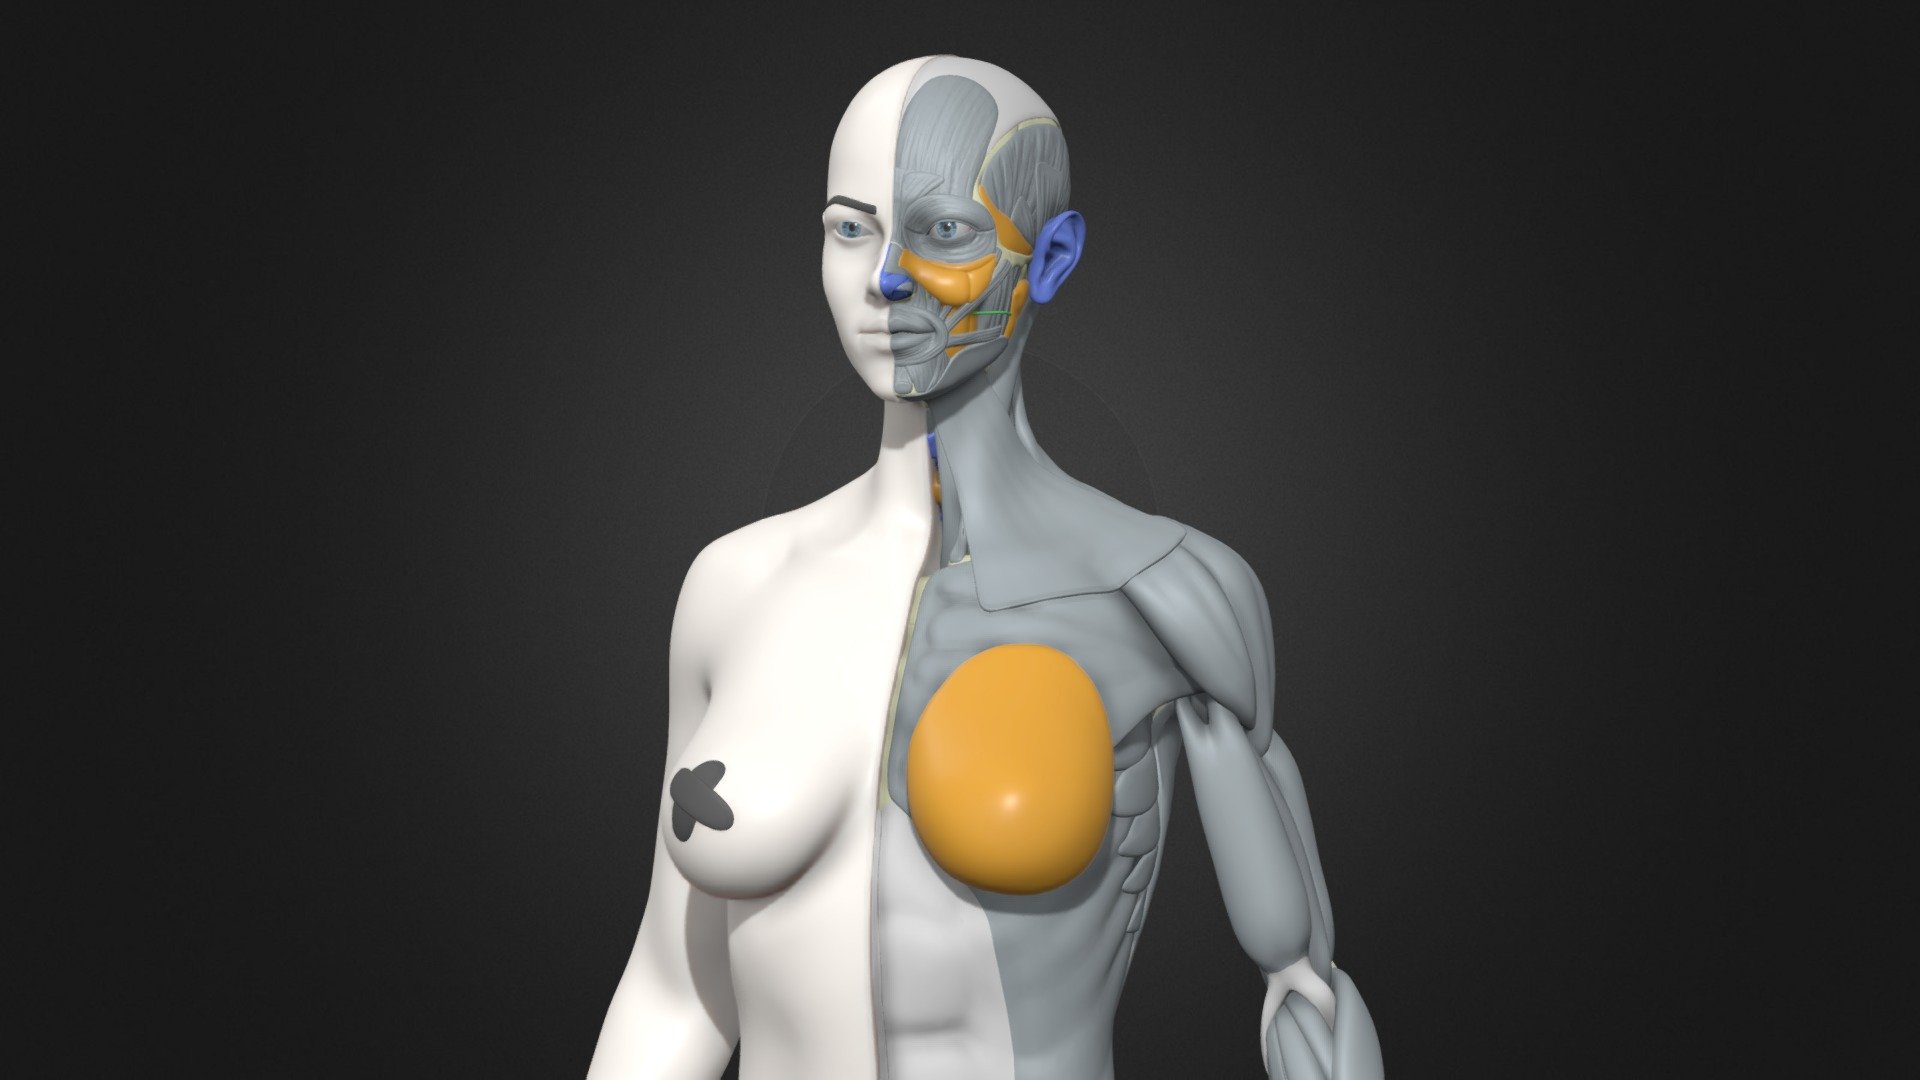 ArtStation - Human body scan